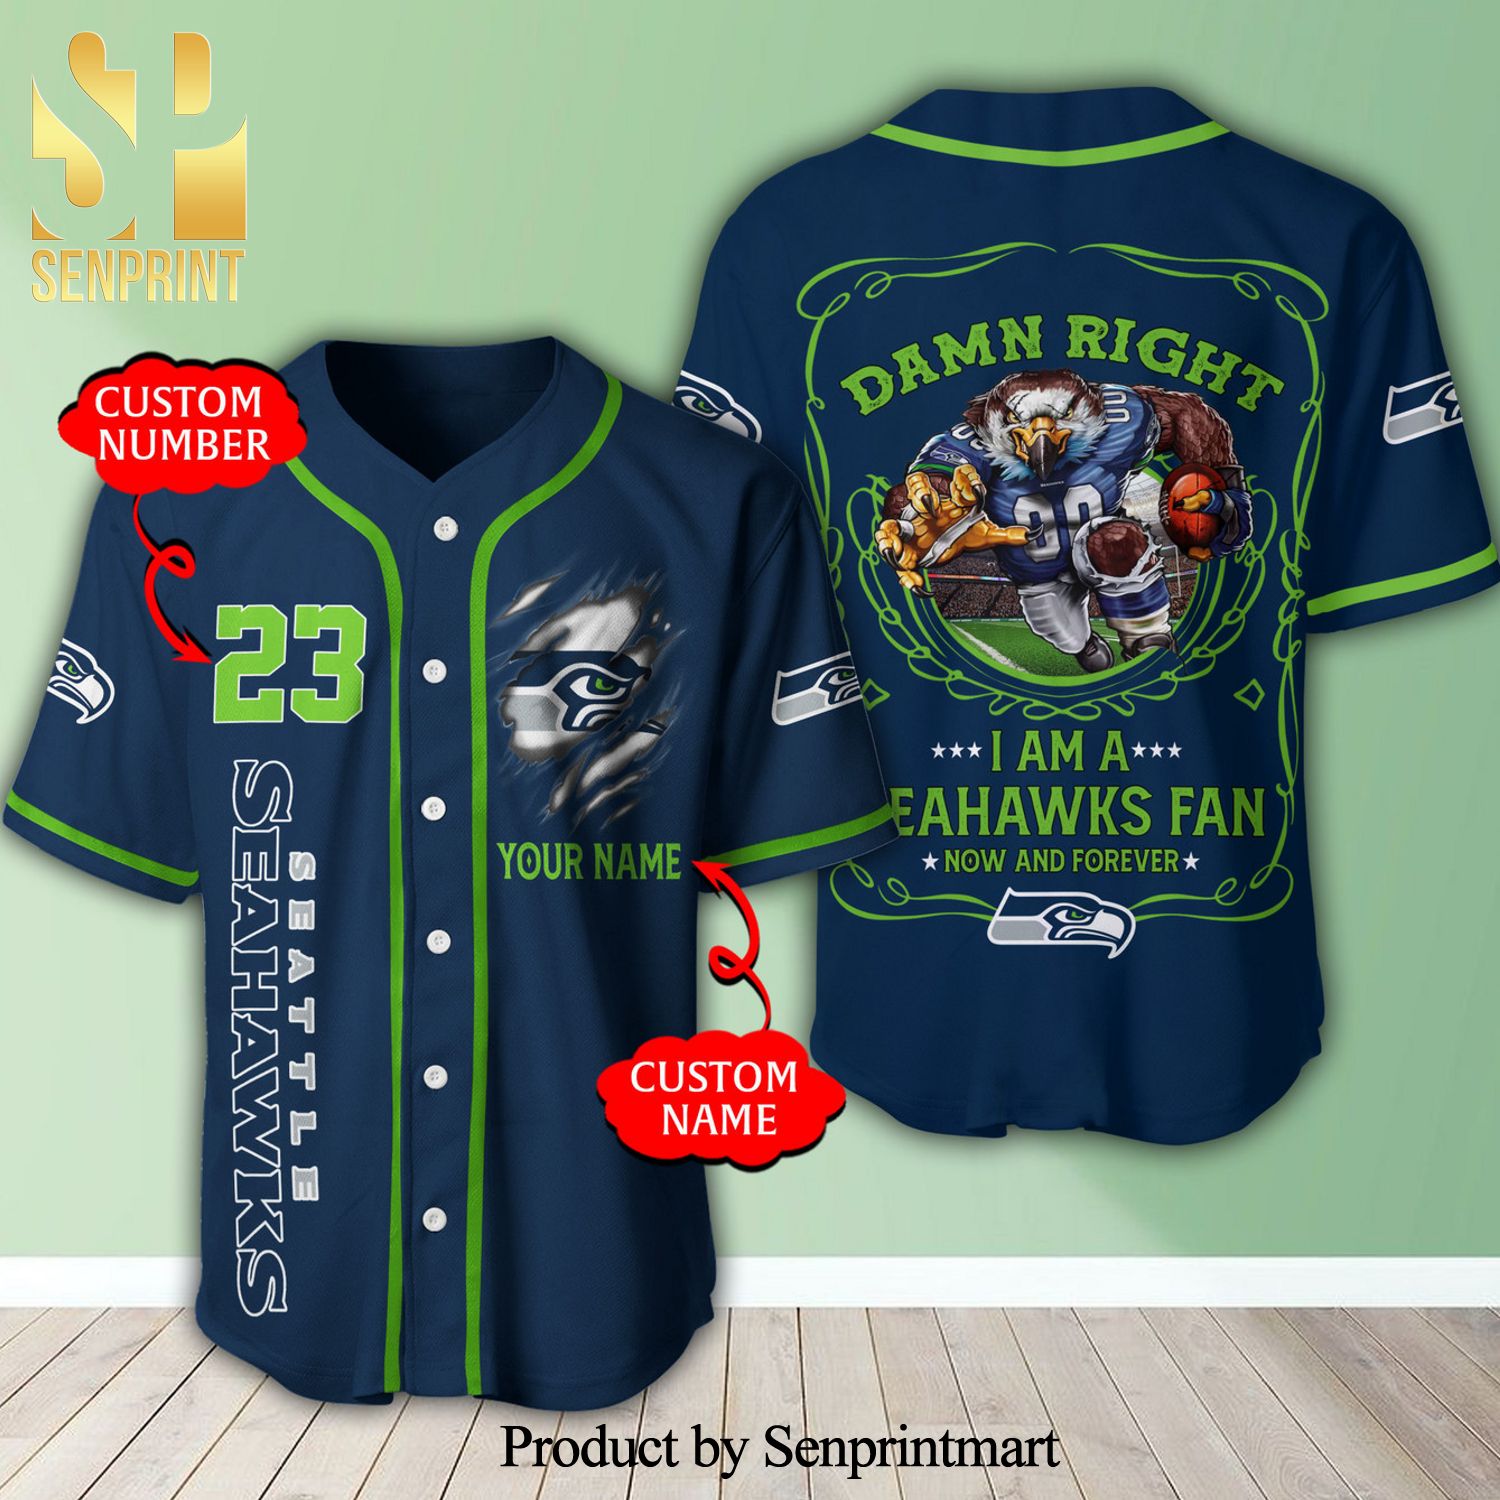 Personalized I Am A Seattle Seahawks Fan Full Printing Baseball Jersey – Navy